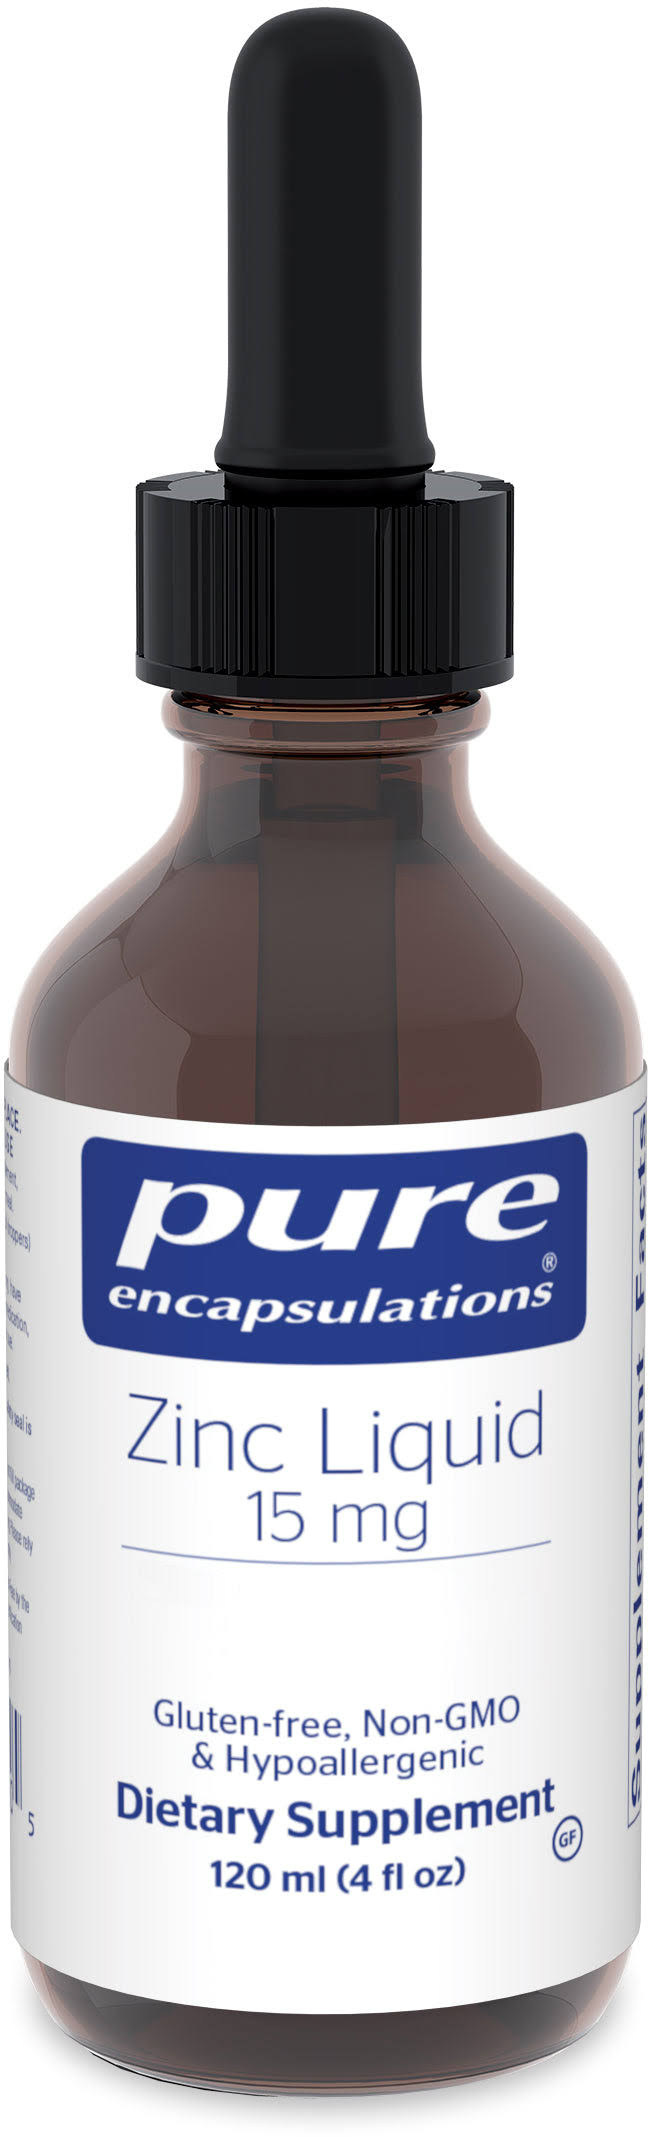 Pure Encapsulations Zinc Liquid Supplement - 15mg, 120ml